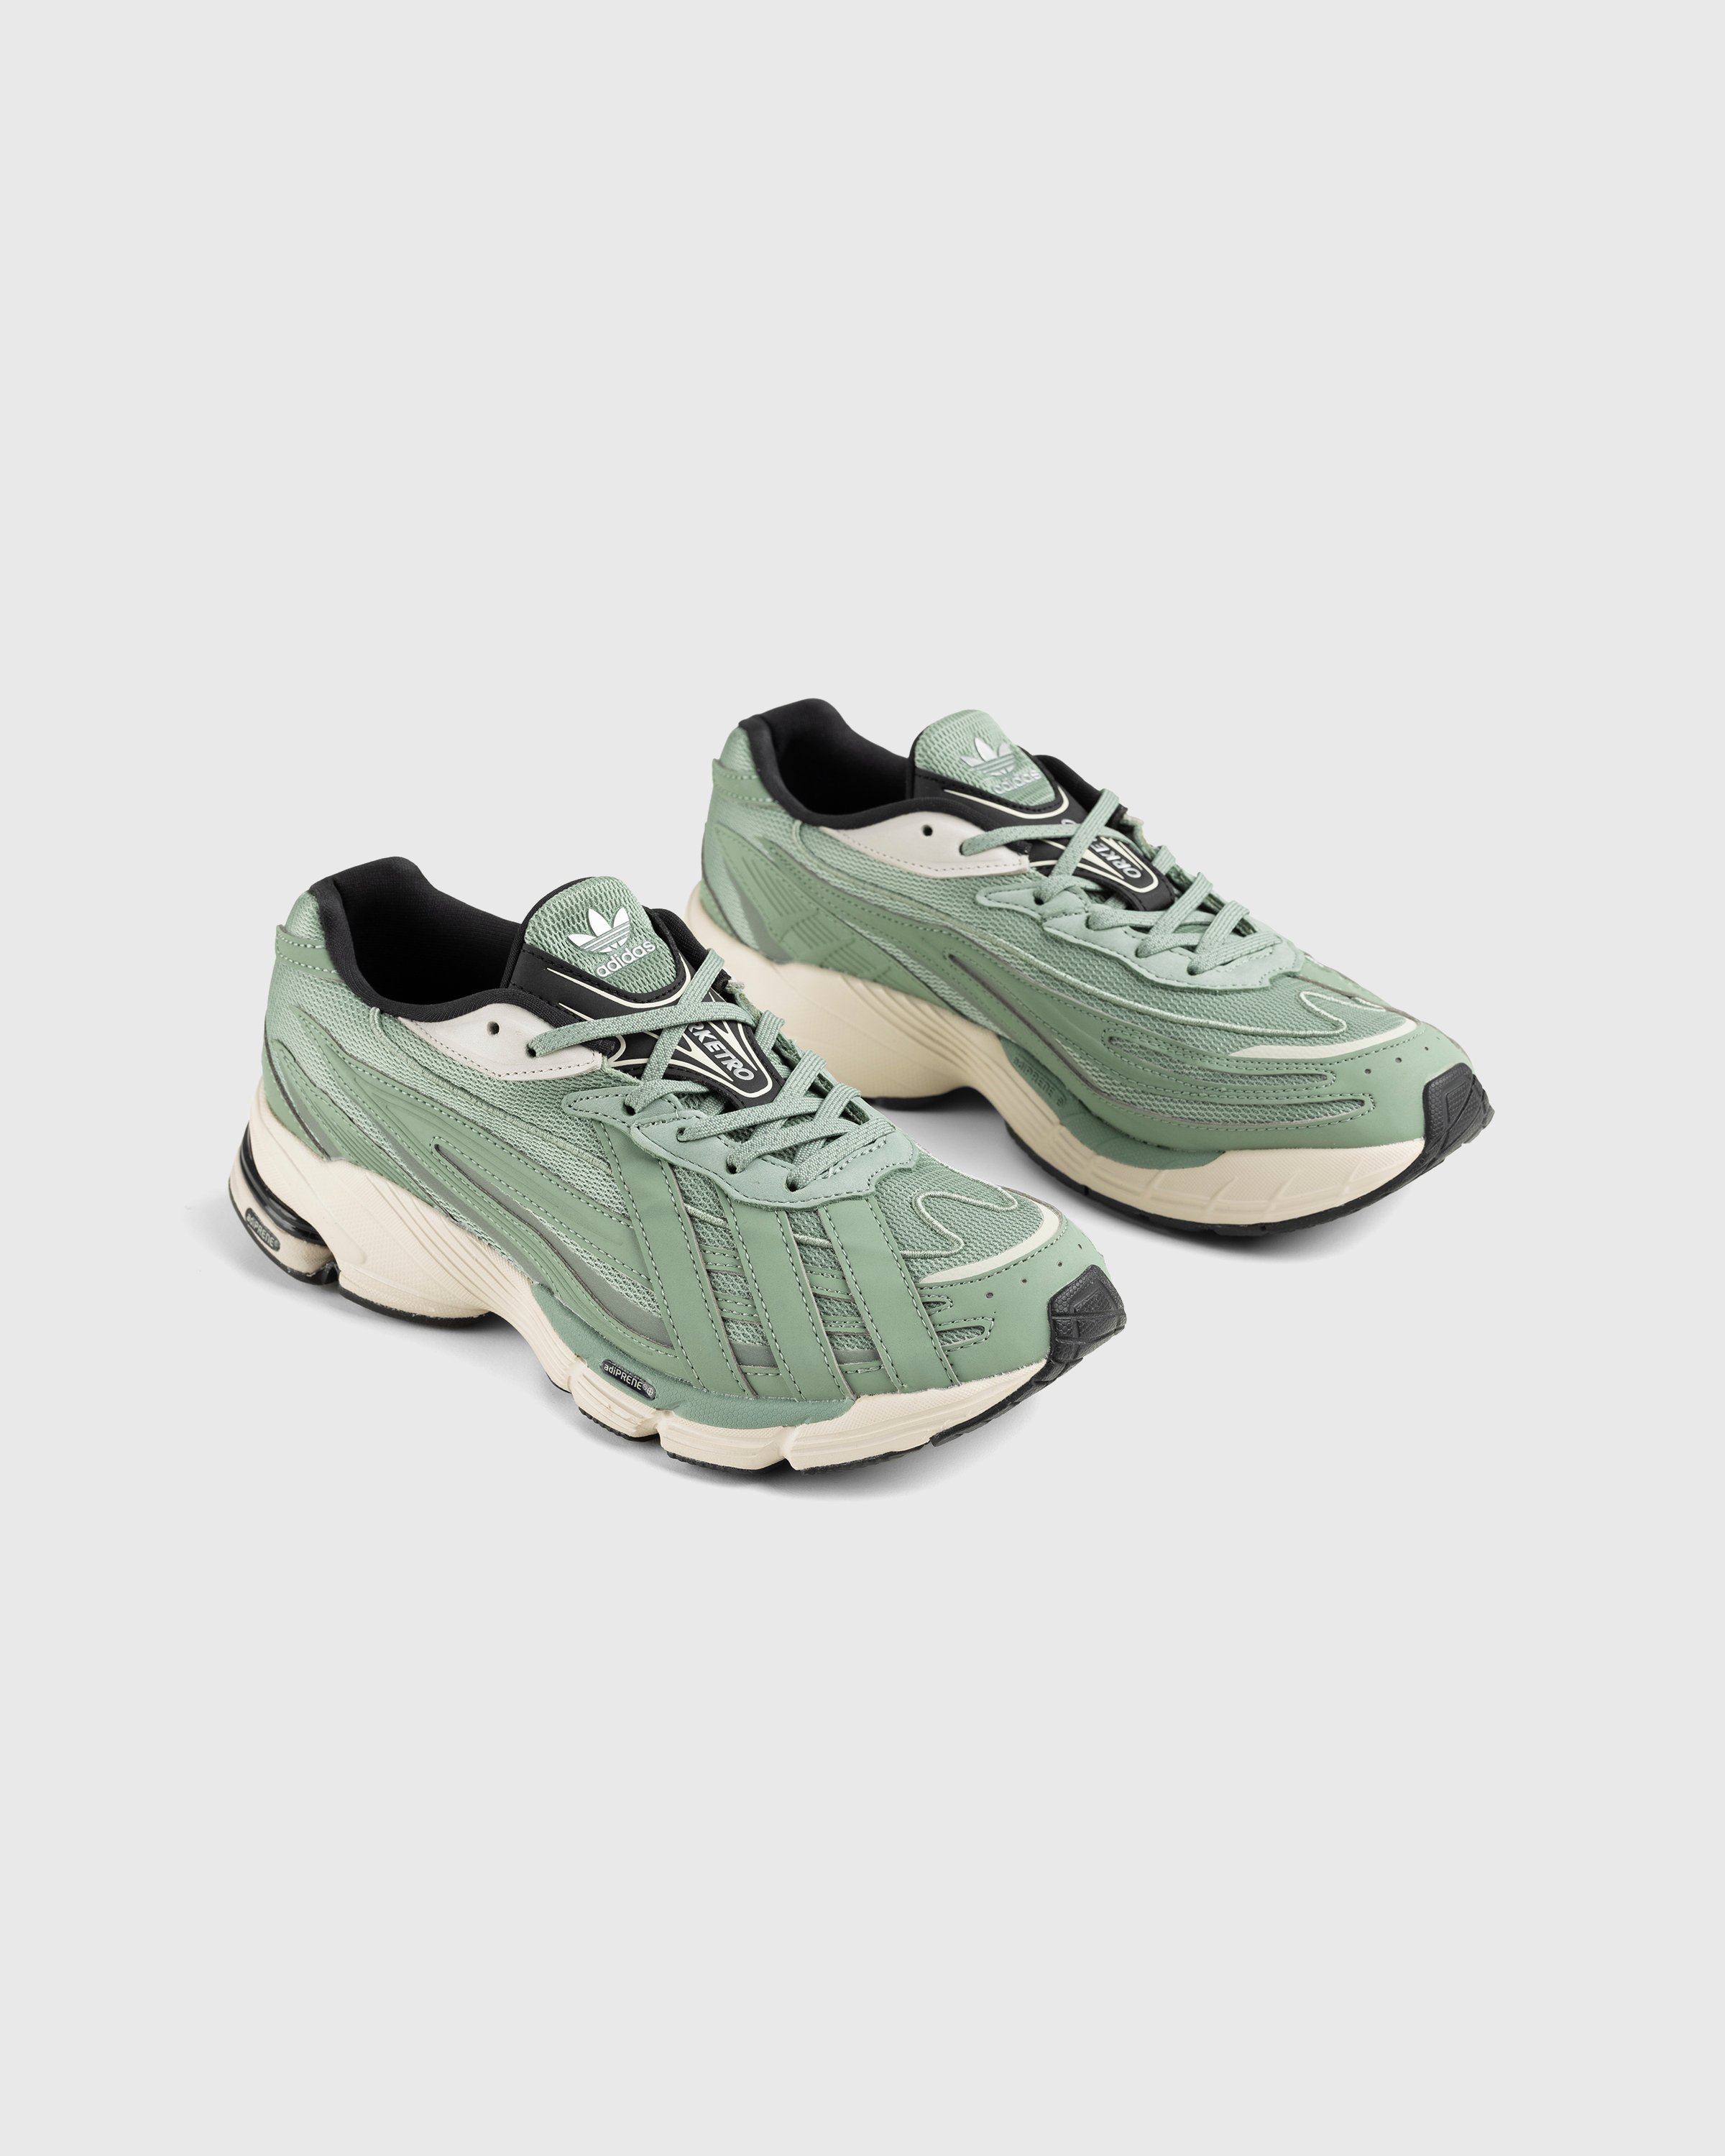 Adidas - Orketro Green/Black/Aluminum - Footwear - Green - Image 3